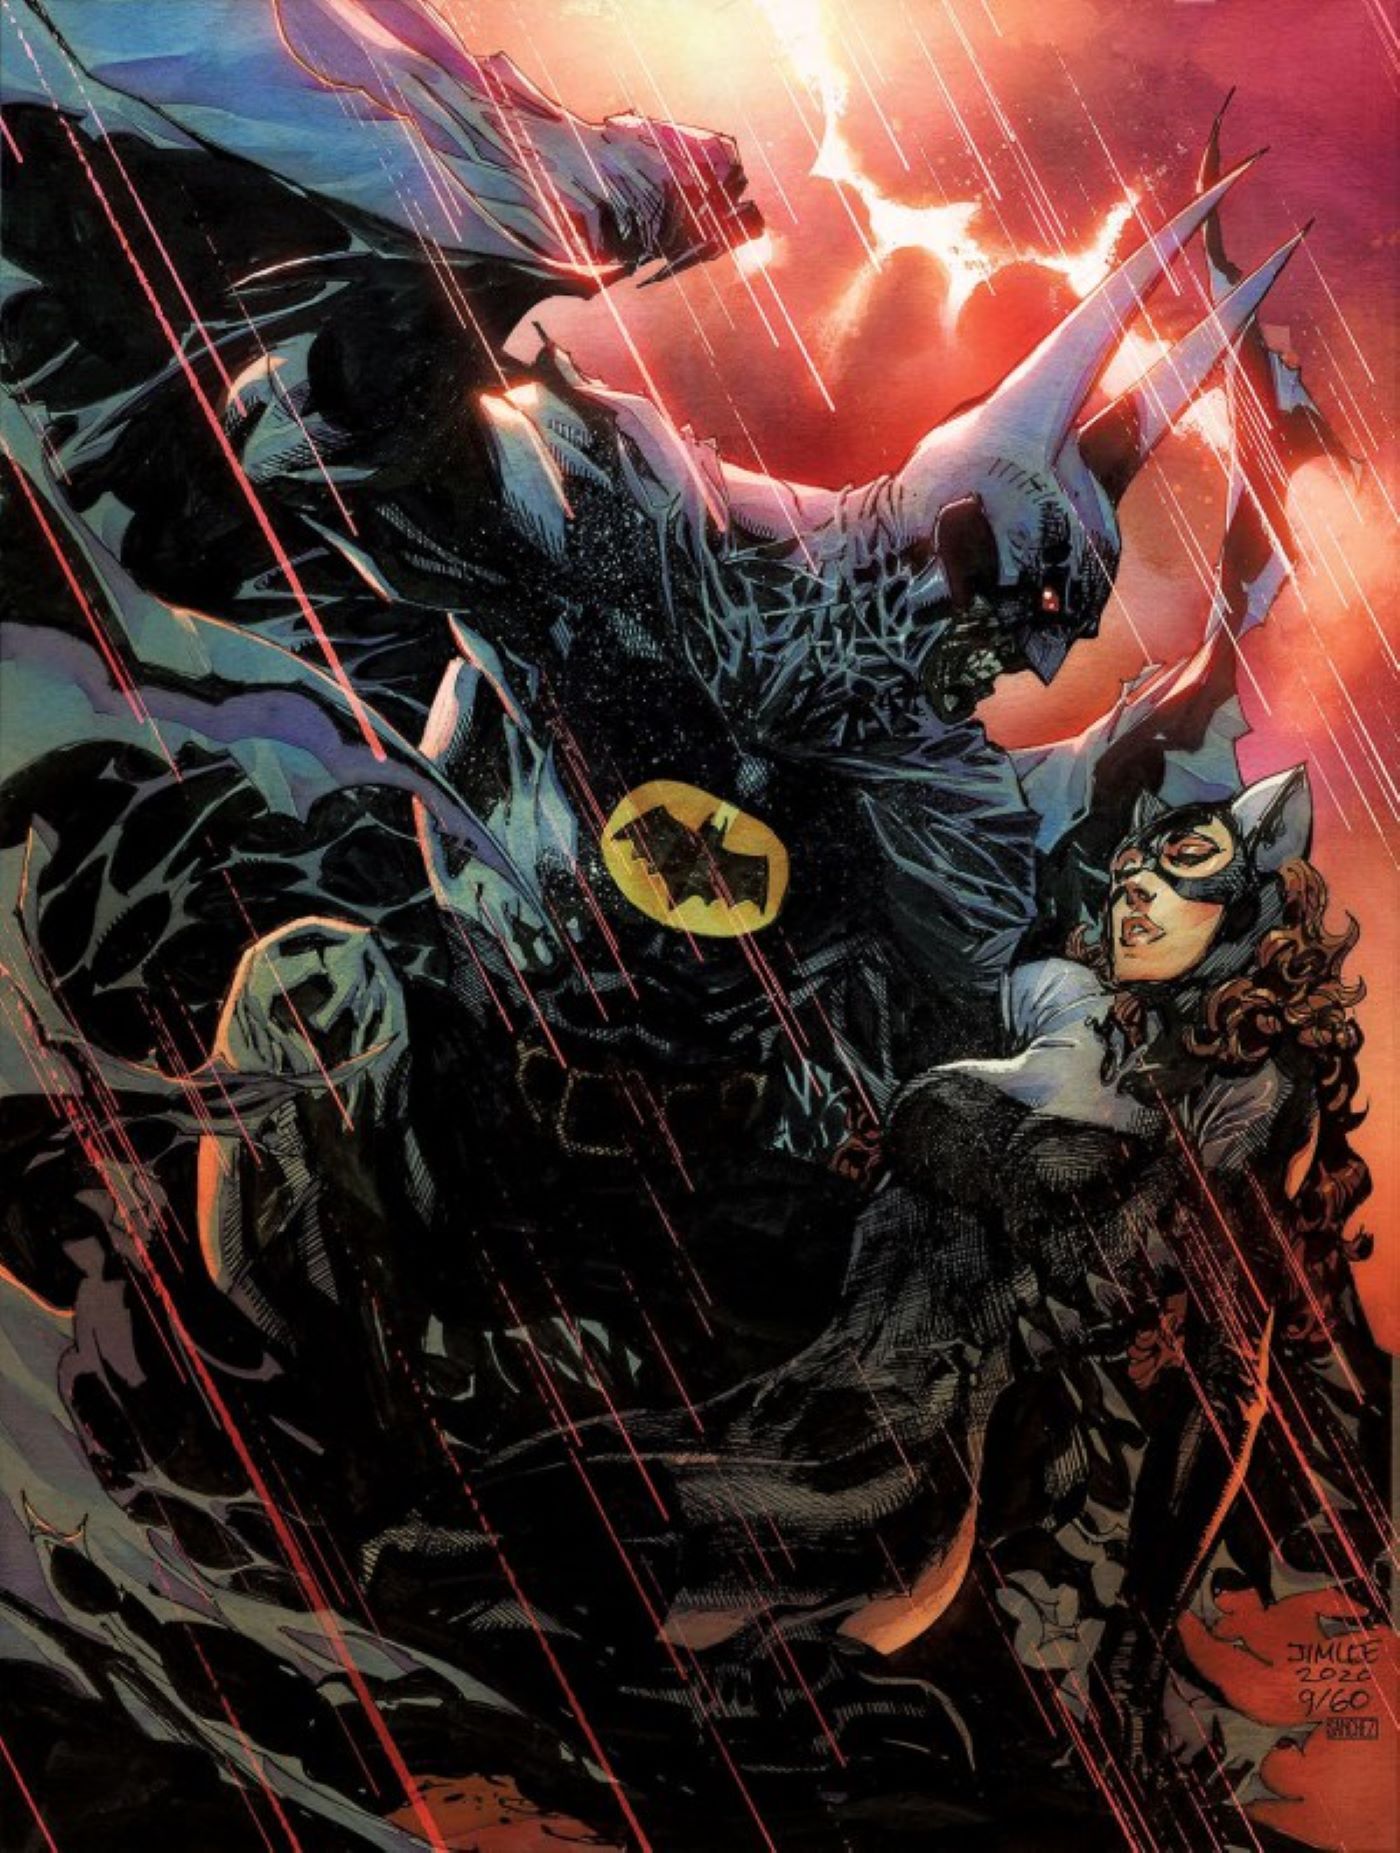 Jim Lee Catwoman # 64 capa variante com o monstro Batman e desmaiou Selina Kyle.